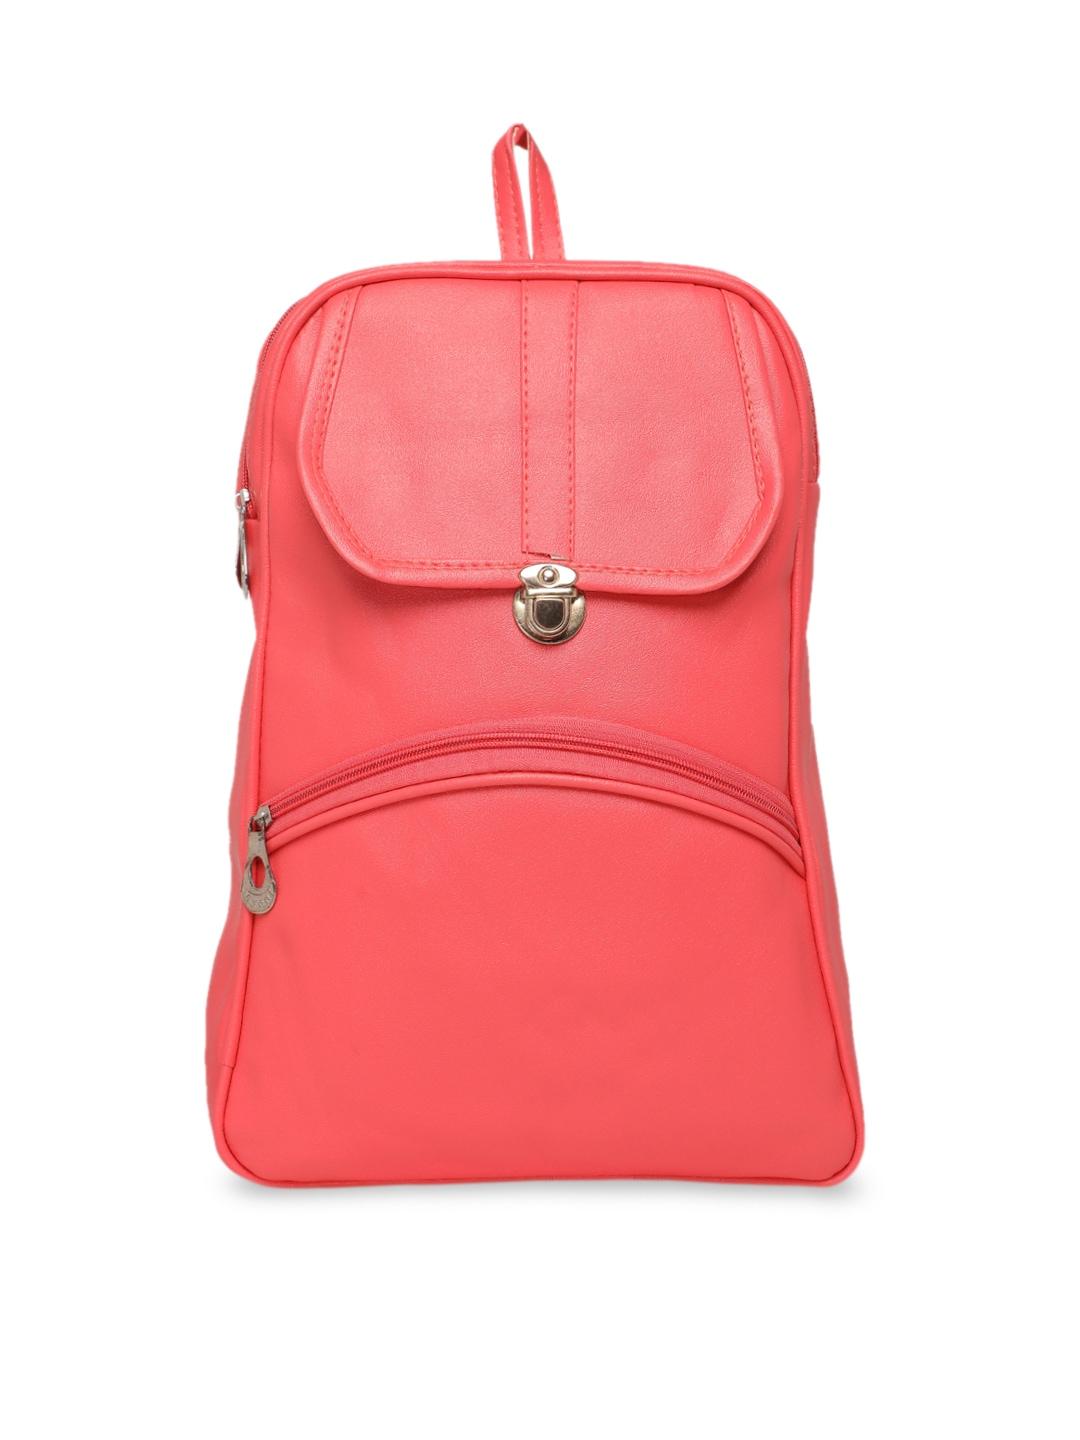 diva walk women pink solid leather backpack